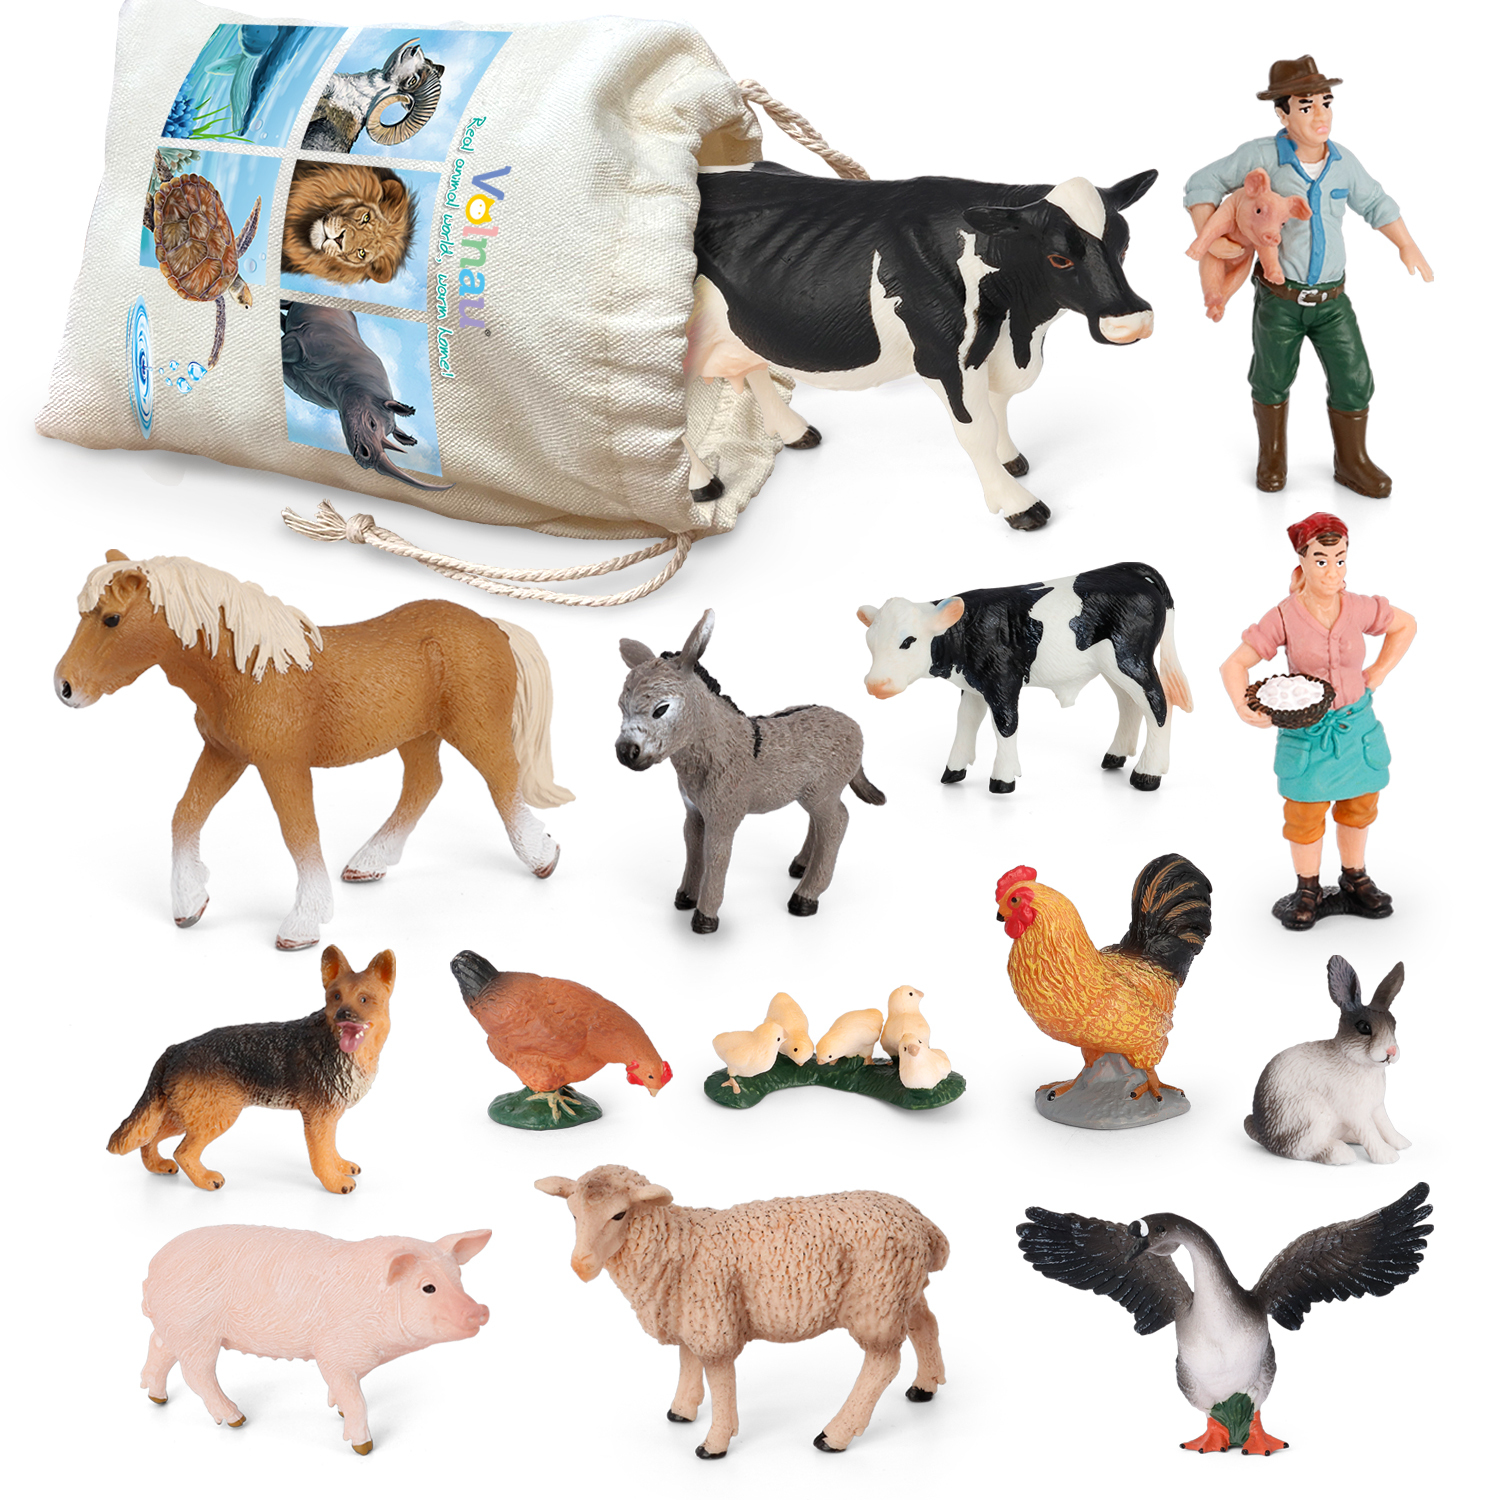 Educational Farm Animal Figures Playset with Farmer & 4 Pigs Kids Toys Gift 